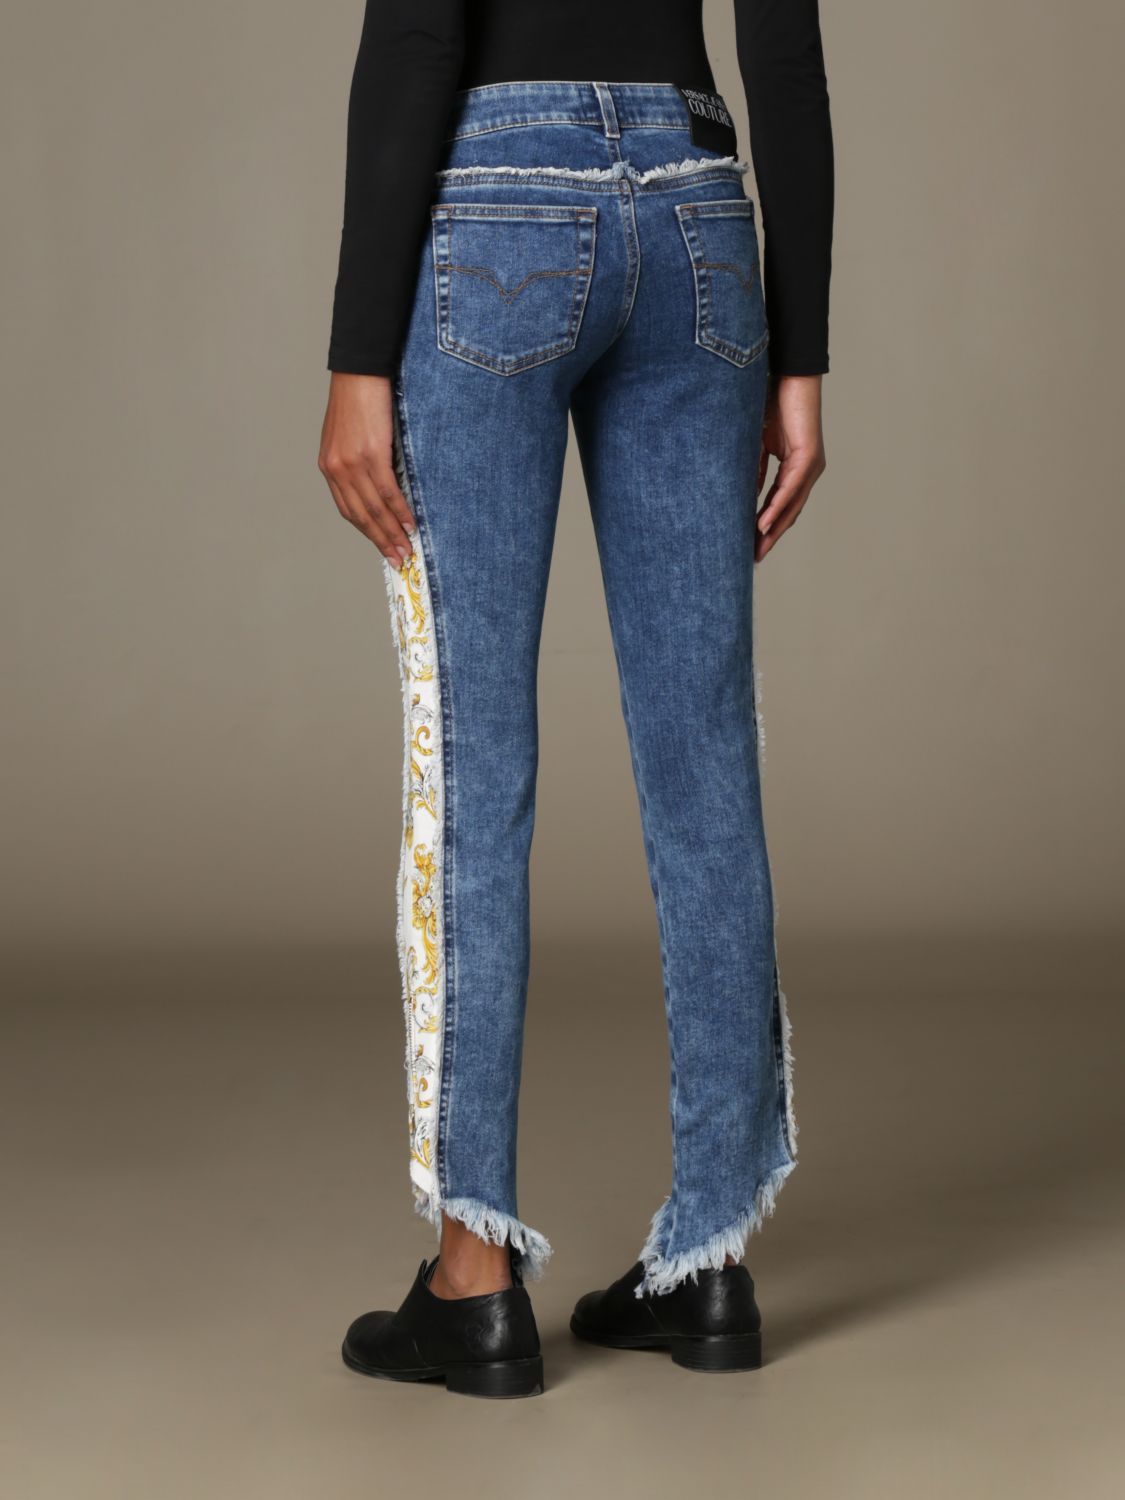 versace jeans women